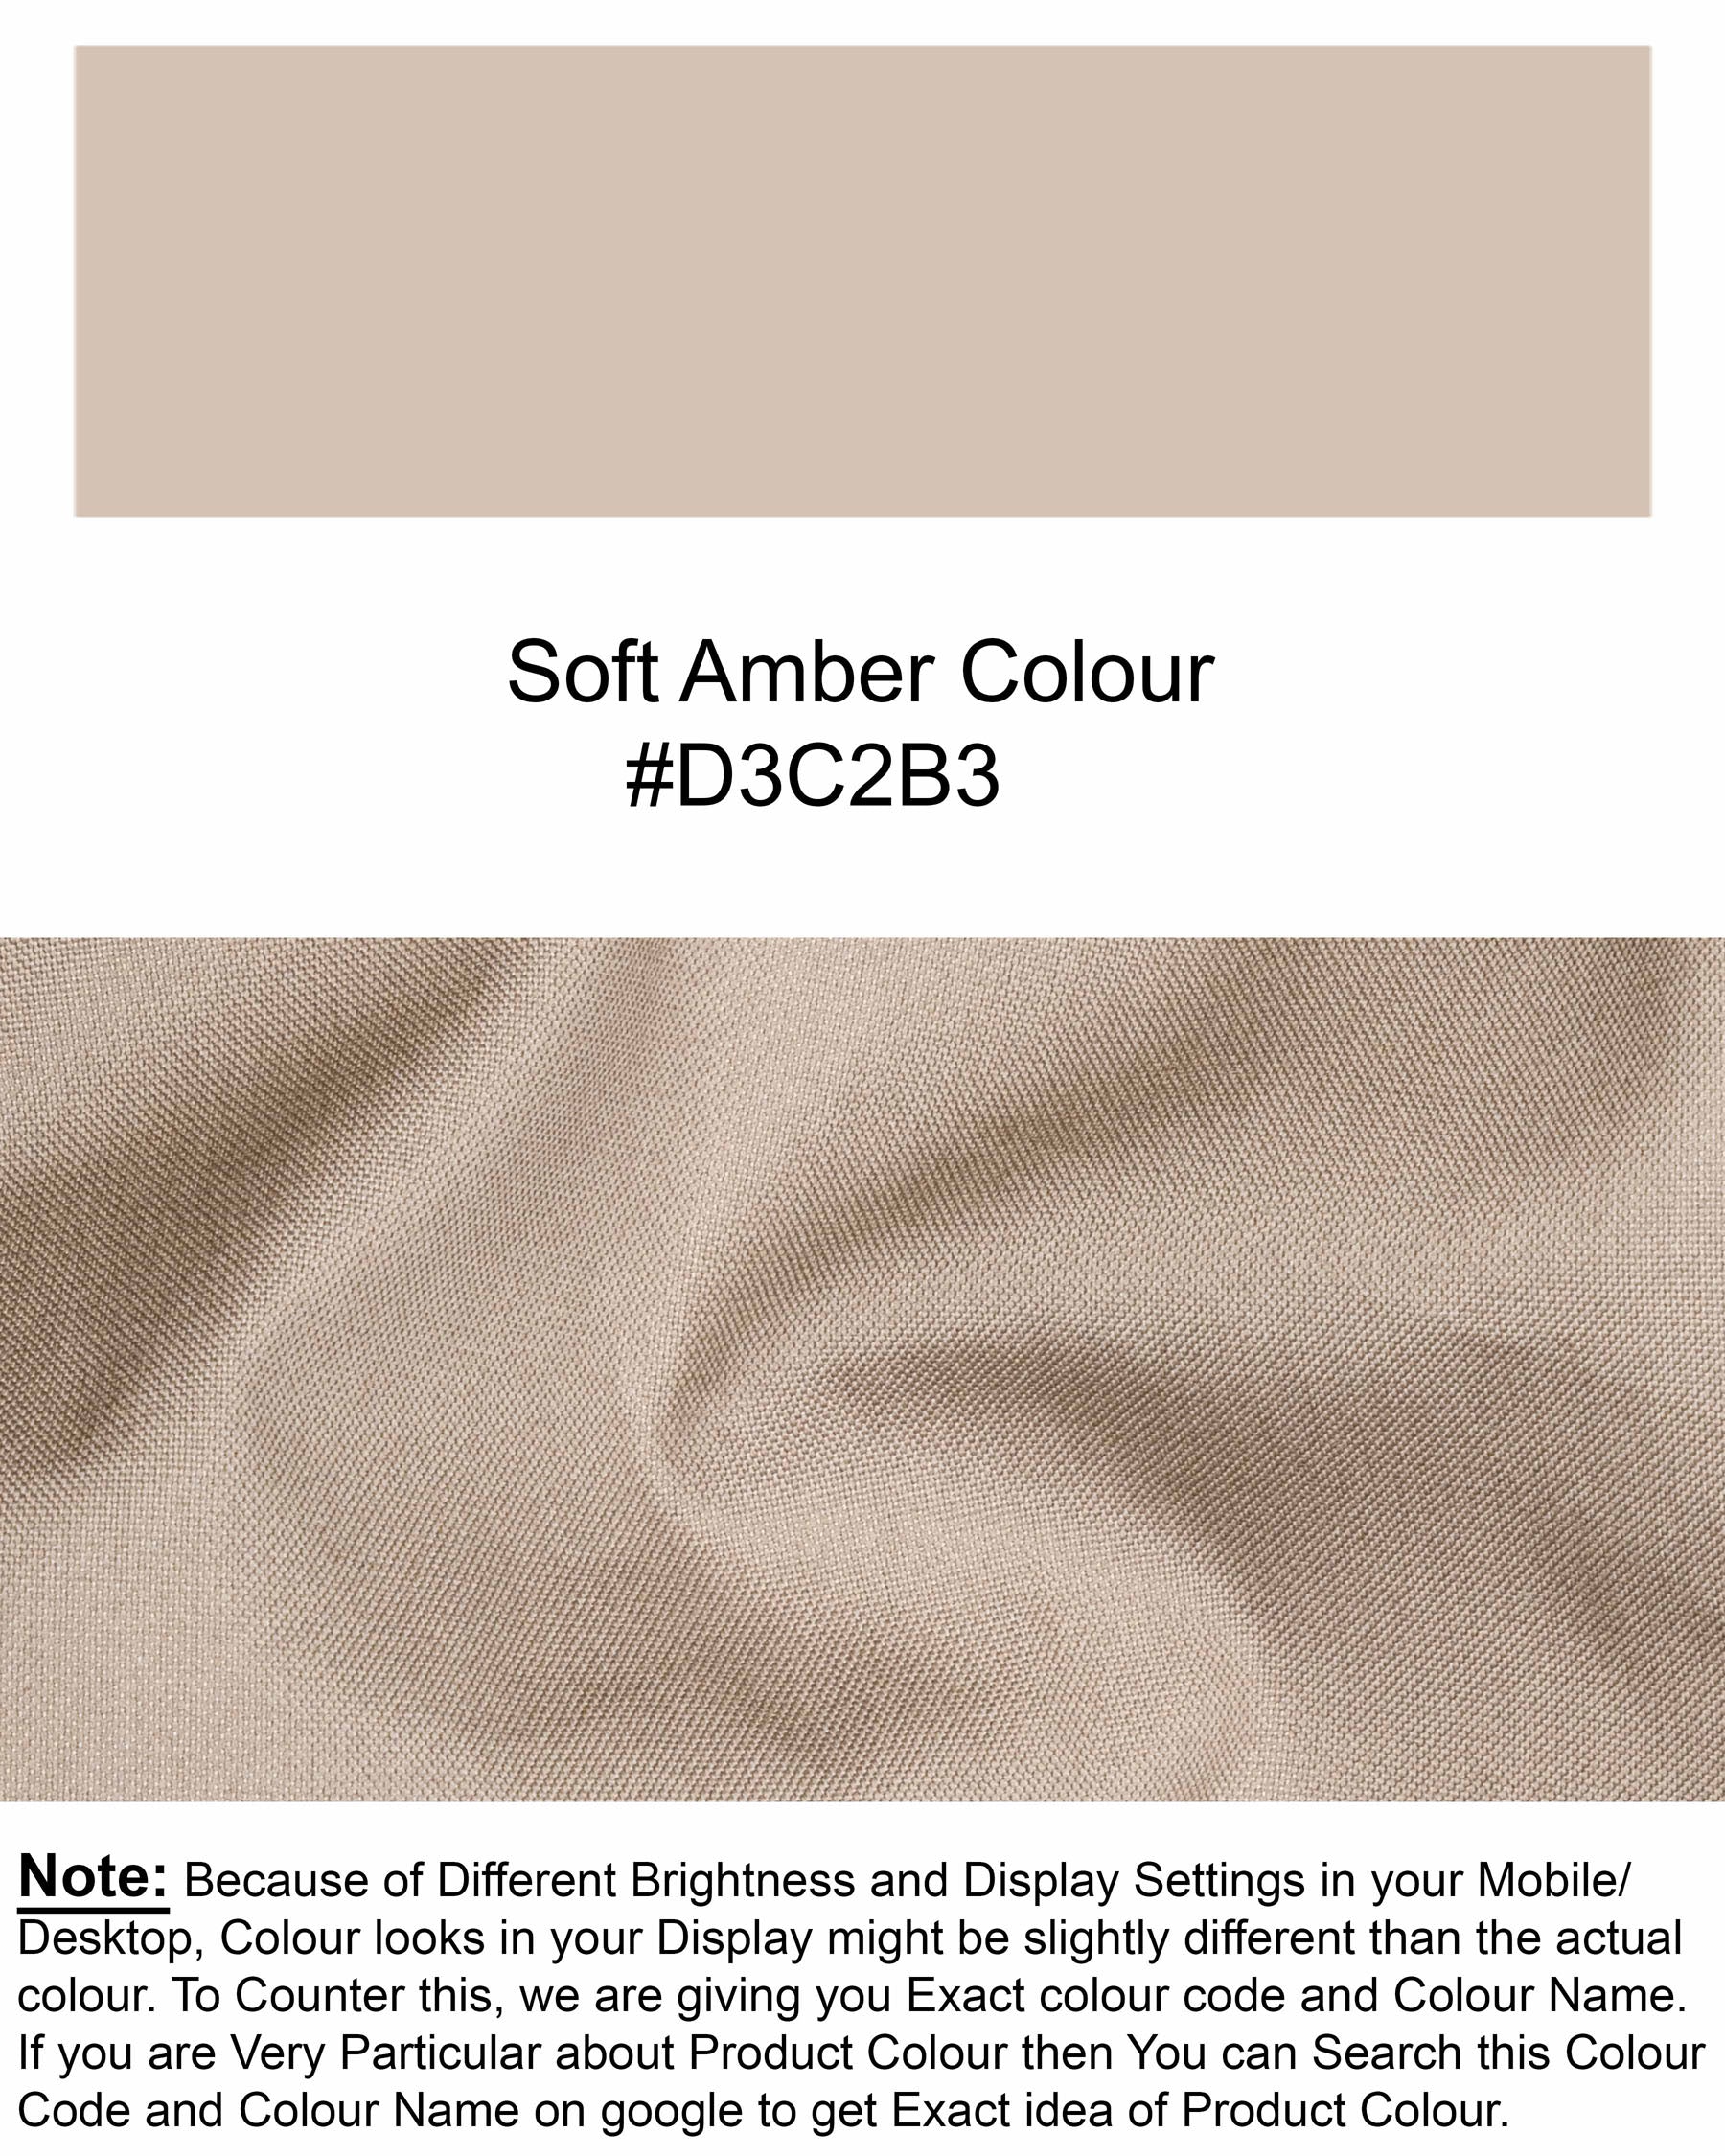 Soft Amber Premium Cotton Shirt 6811-BD-BLK-38,6811-BD-BLK-38,6811-BD-BLK-39,6811-BD-BLK-39,6811-BD-BLK-40,6811-BD-BLK-40,6811-BD-BLK-42,6811-BD-BLK-42,6811-BD-BLK-44,6811-BD-BLK-44,6811-BD-BLK-46,6811-BD-BLK-46,6811-BD-BLK-48,6811-BD-BLK-48,6811-BD-BLK-50,6811-BD-BLK-50,6811-BD-BLK-52,6811-BD-BLK-52